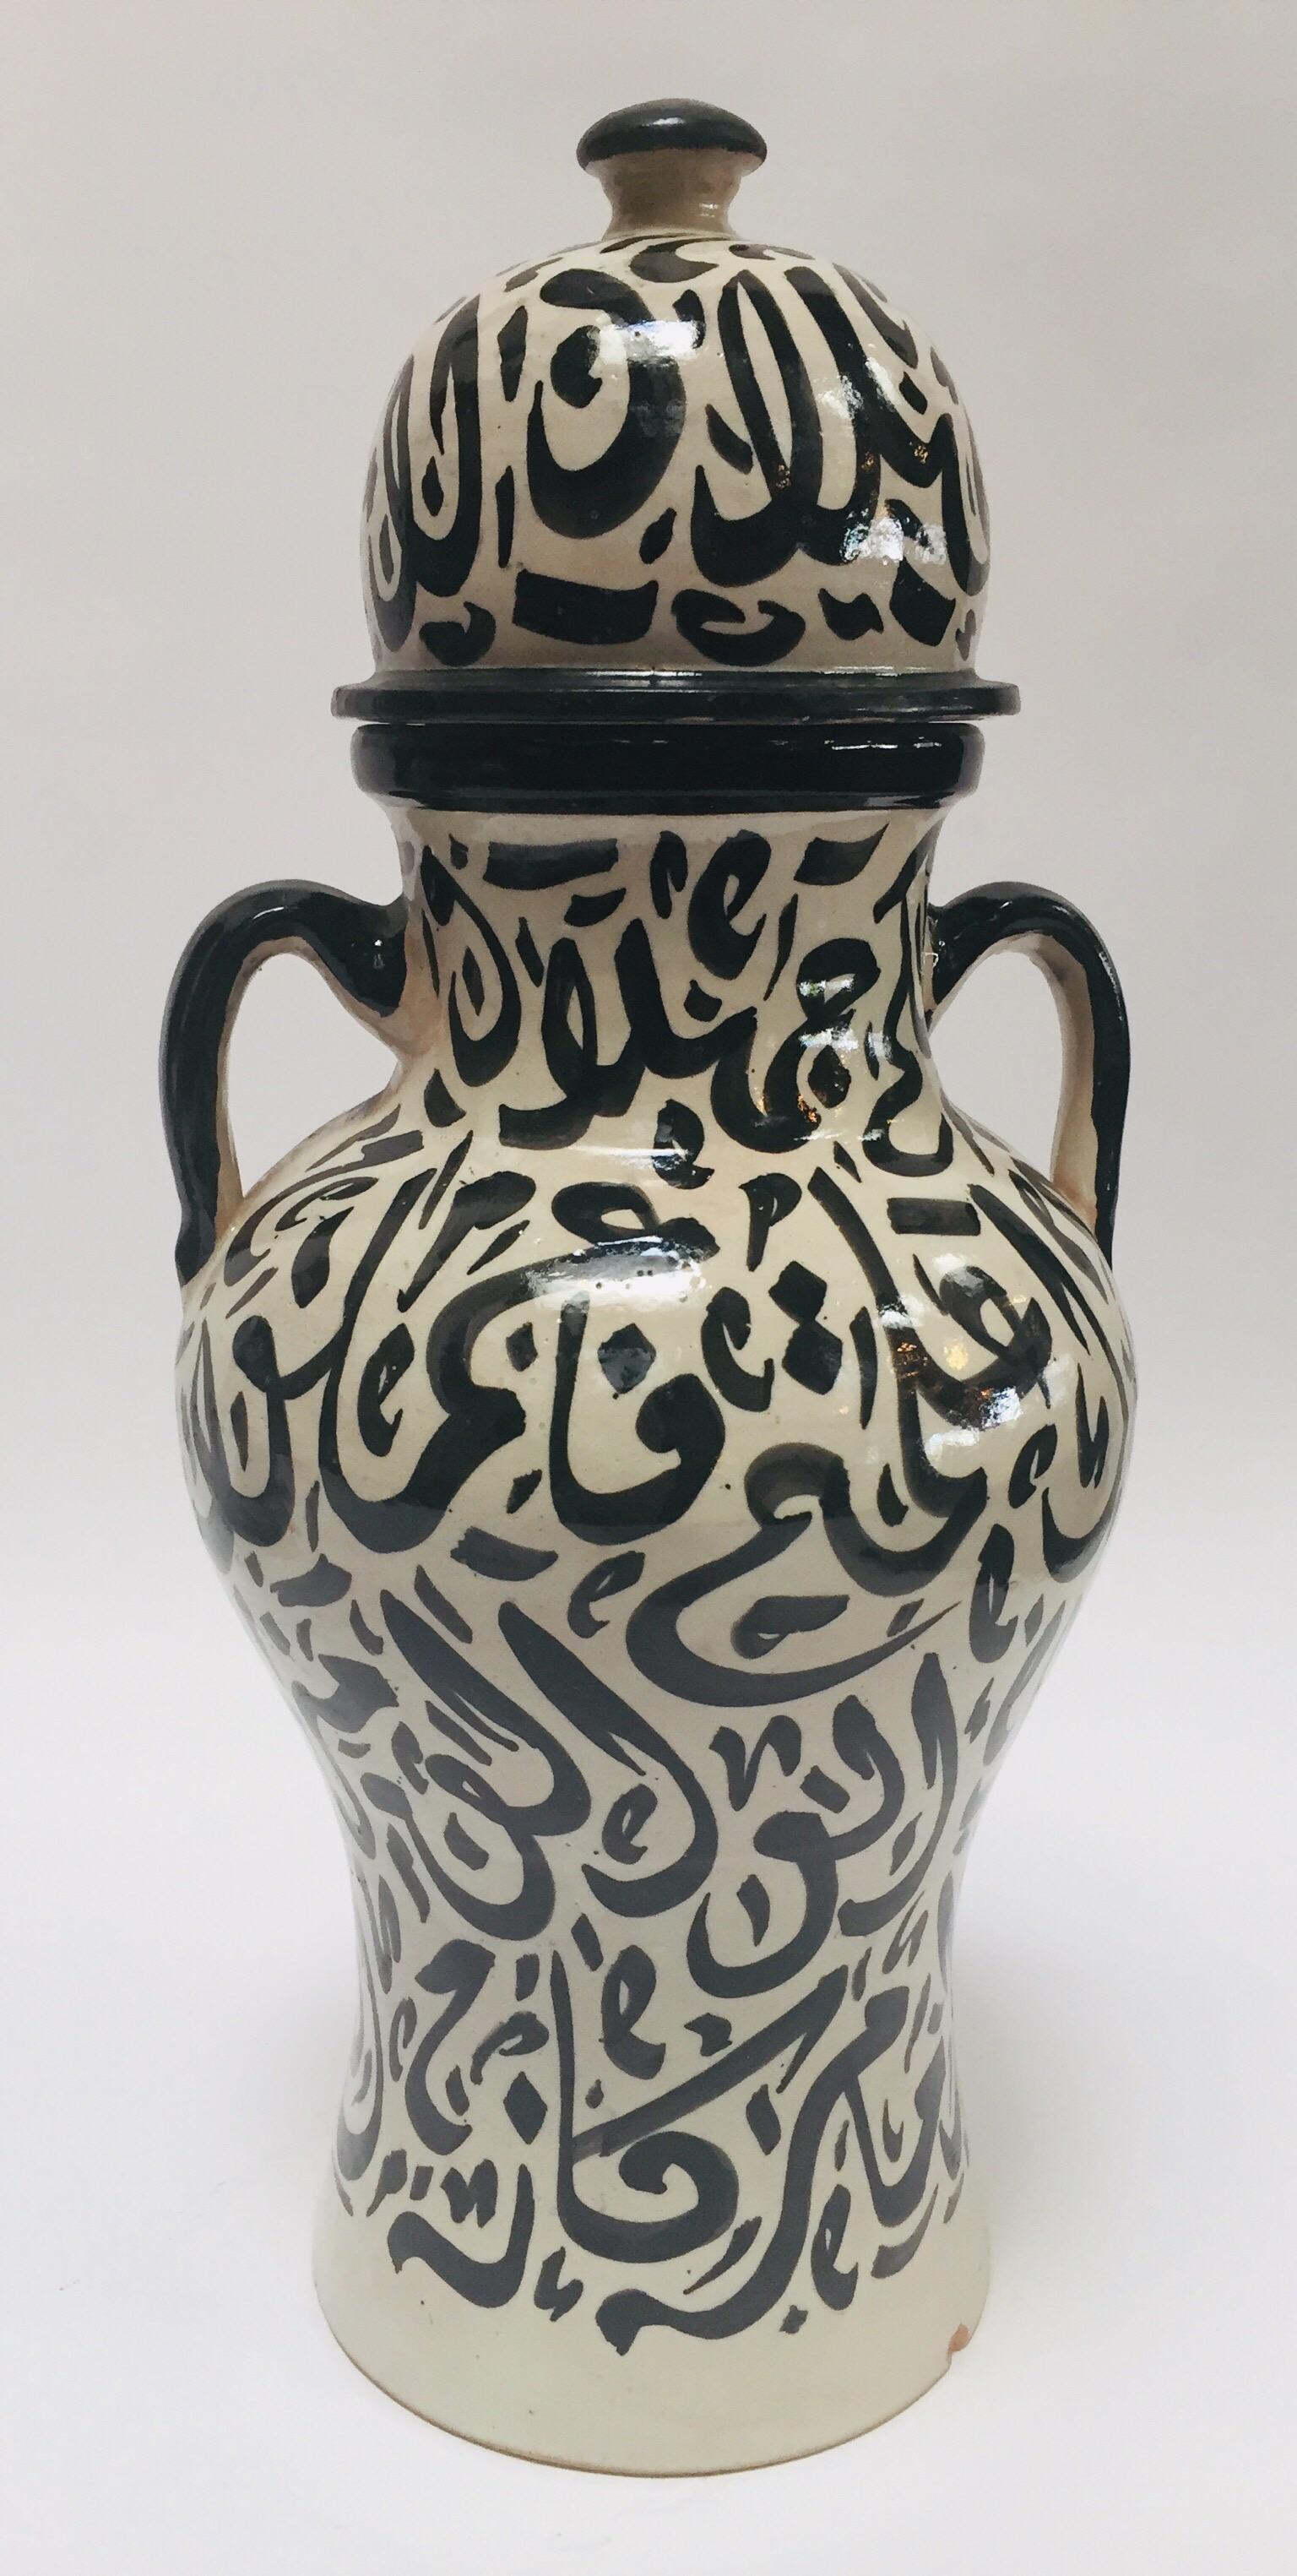 20th Century Pair of Moorish Glazed Ceramic Jars with Arabic Calligraphy from Fez